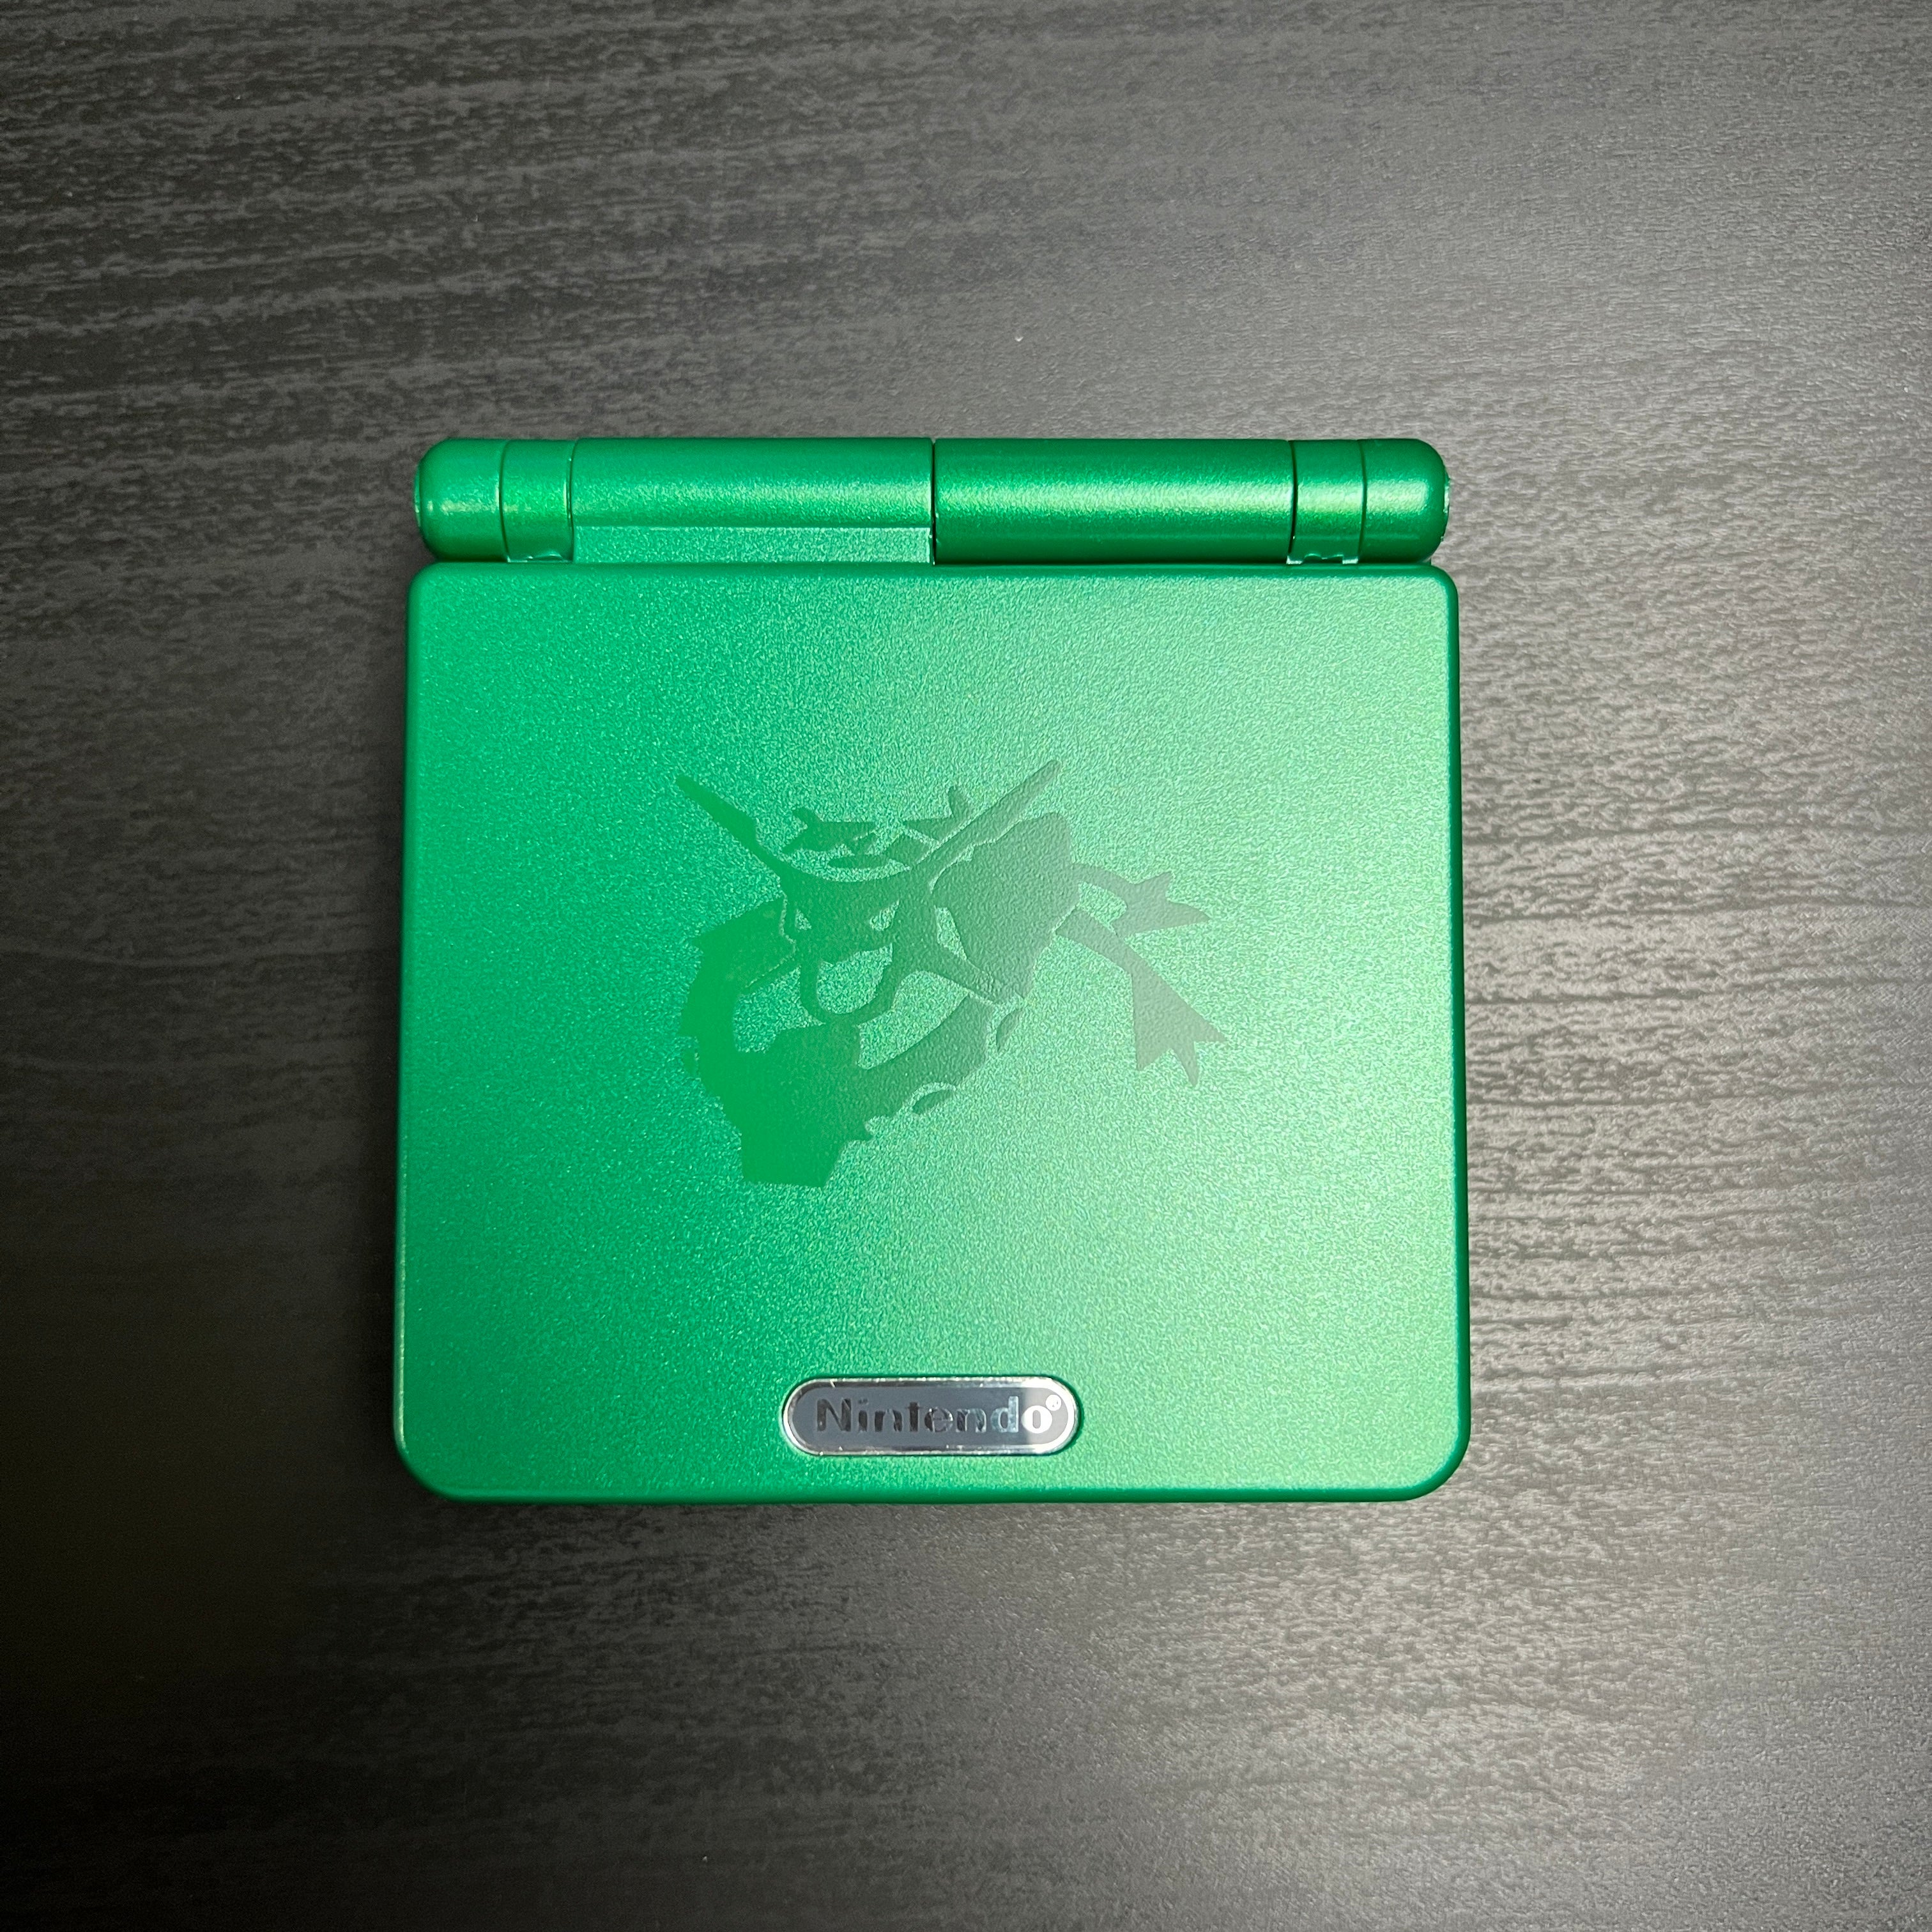 Modded Game Boy Advance SP W/ IPS Screen (Emerald)